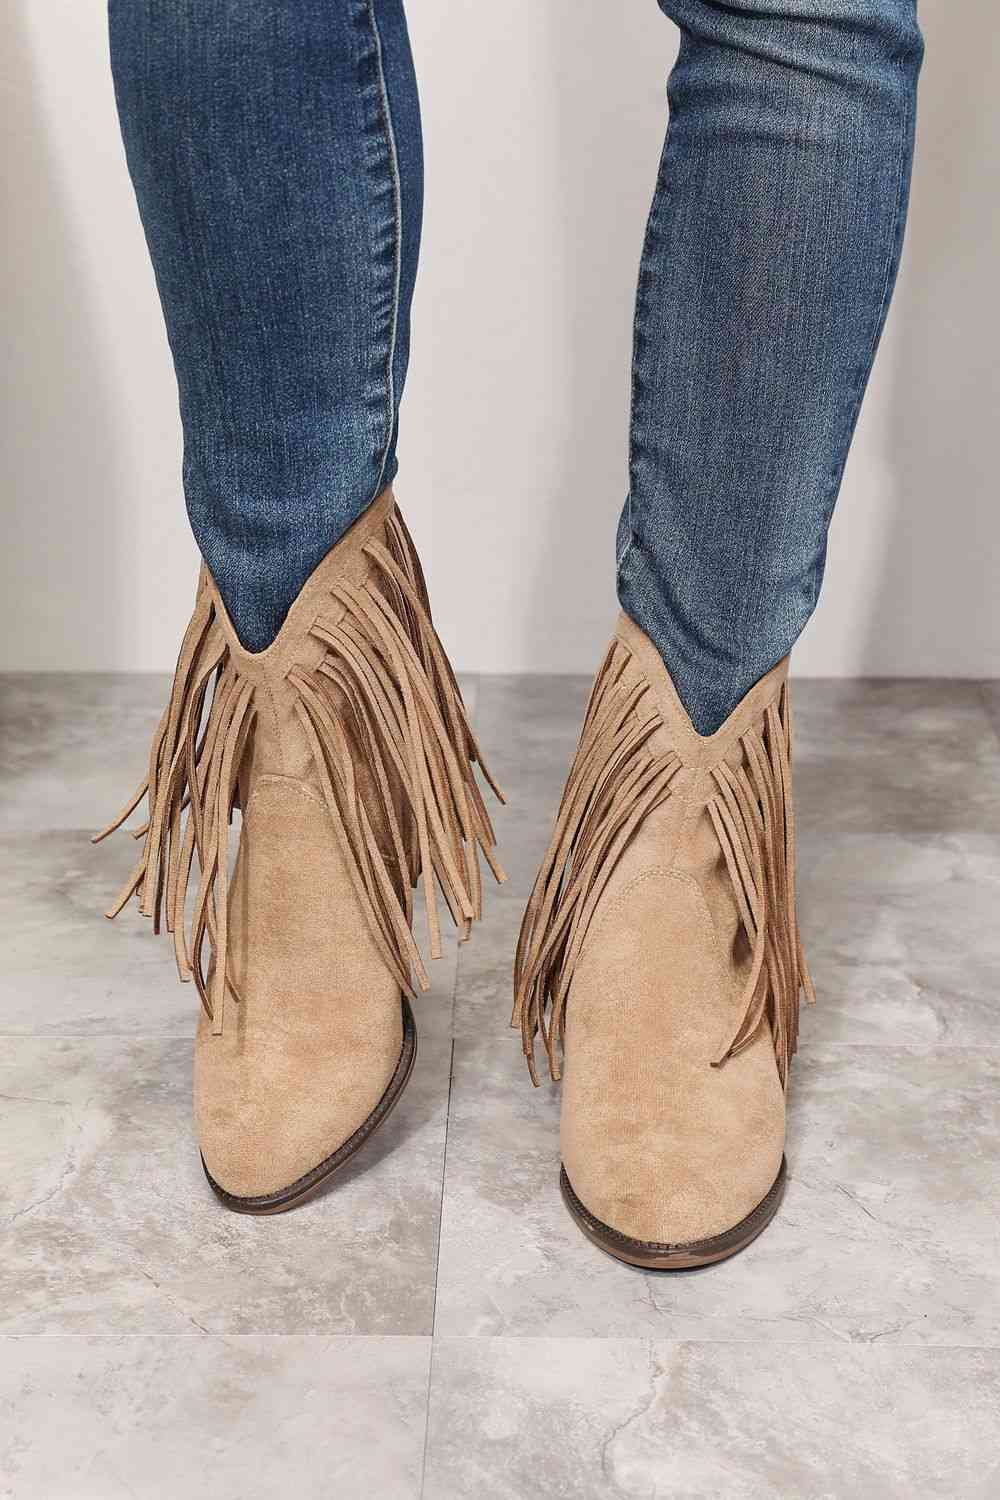 Legend Women's Fringe Cowboy Western Ankle Boots Tan